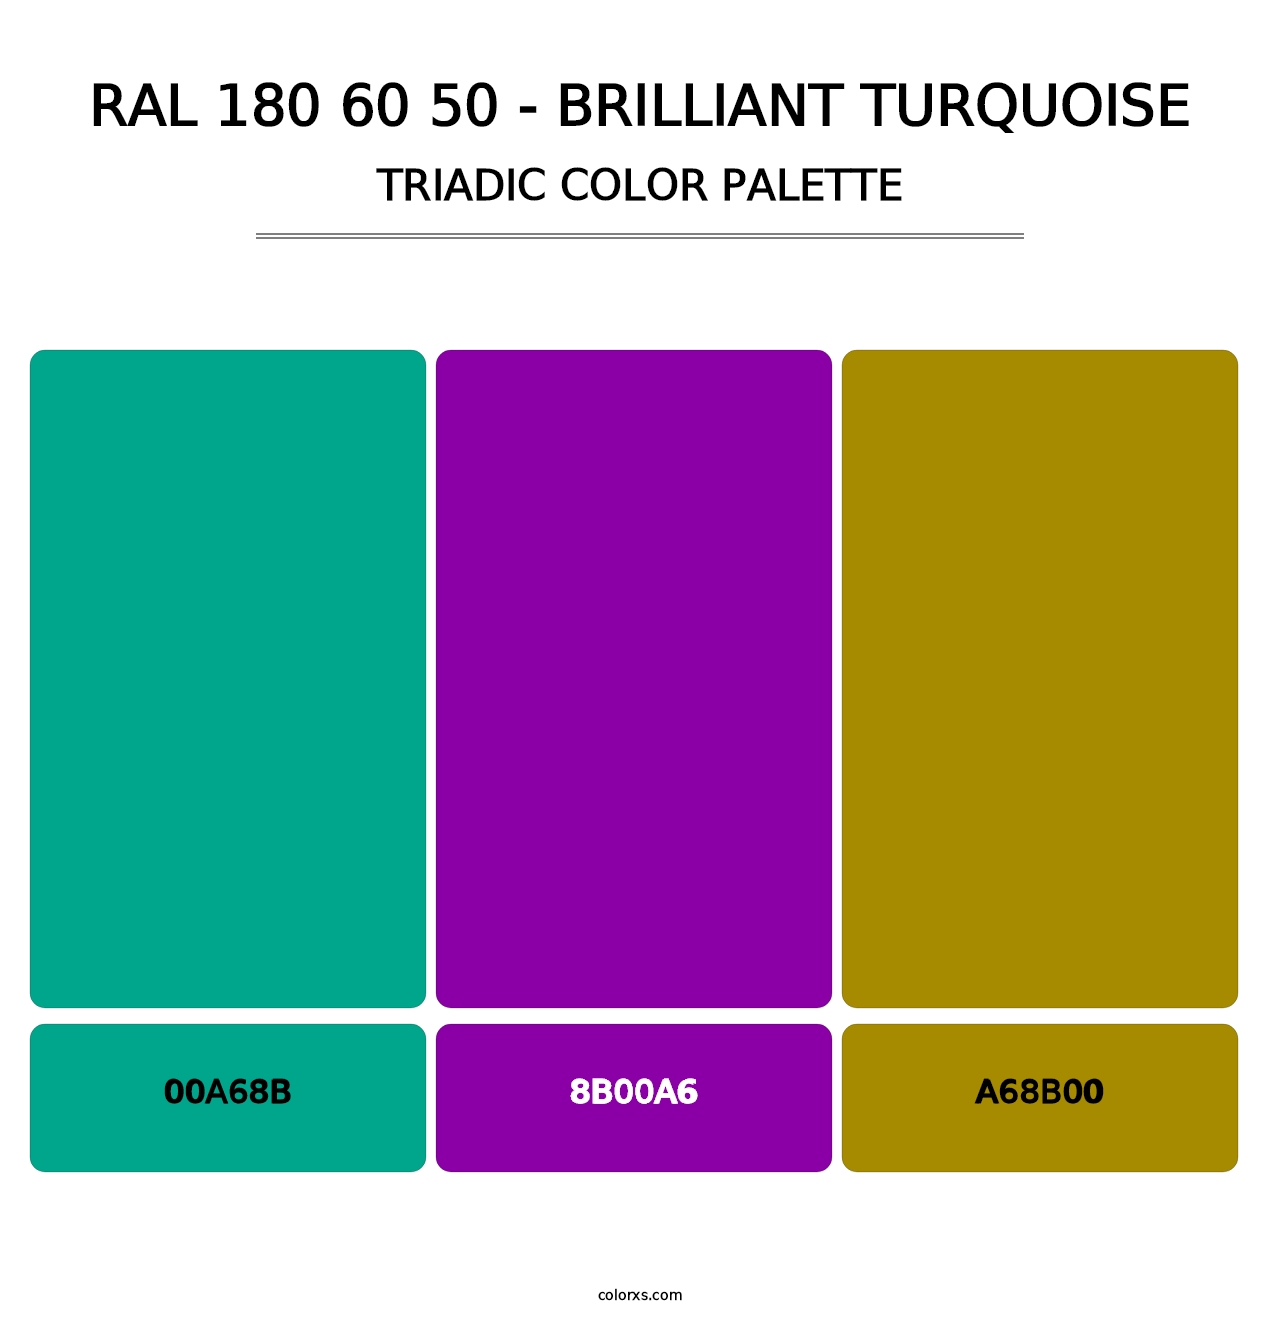 RAL 180 60 50 - Brilliant Turquoise - Triadic Color Palette